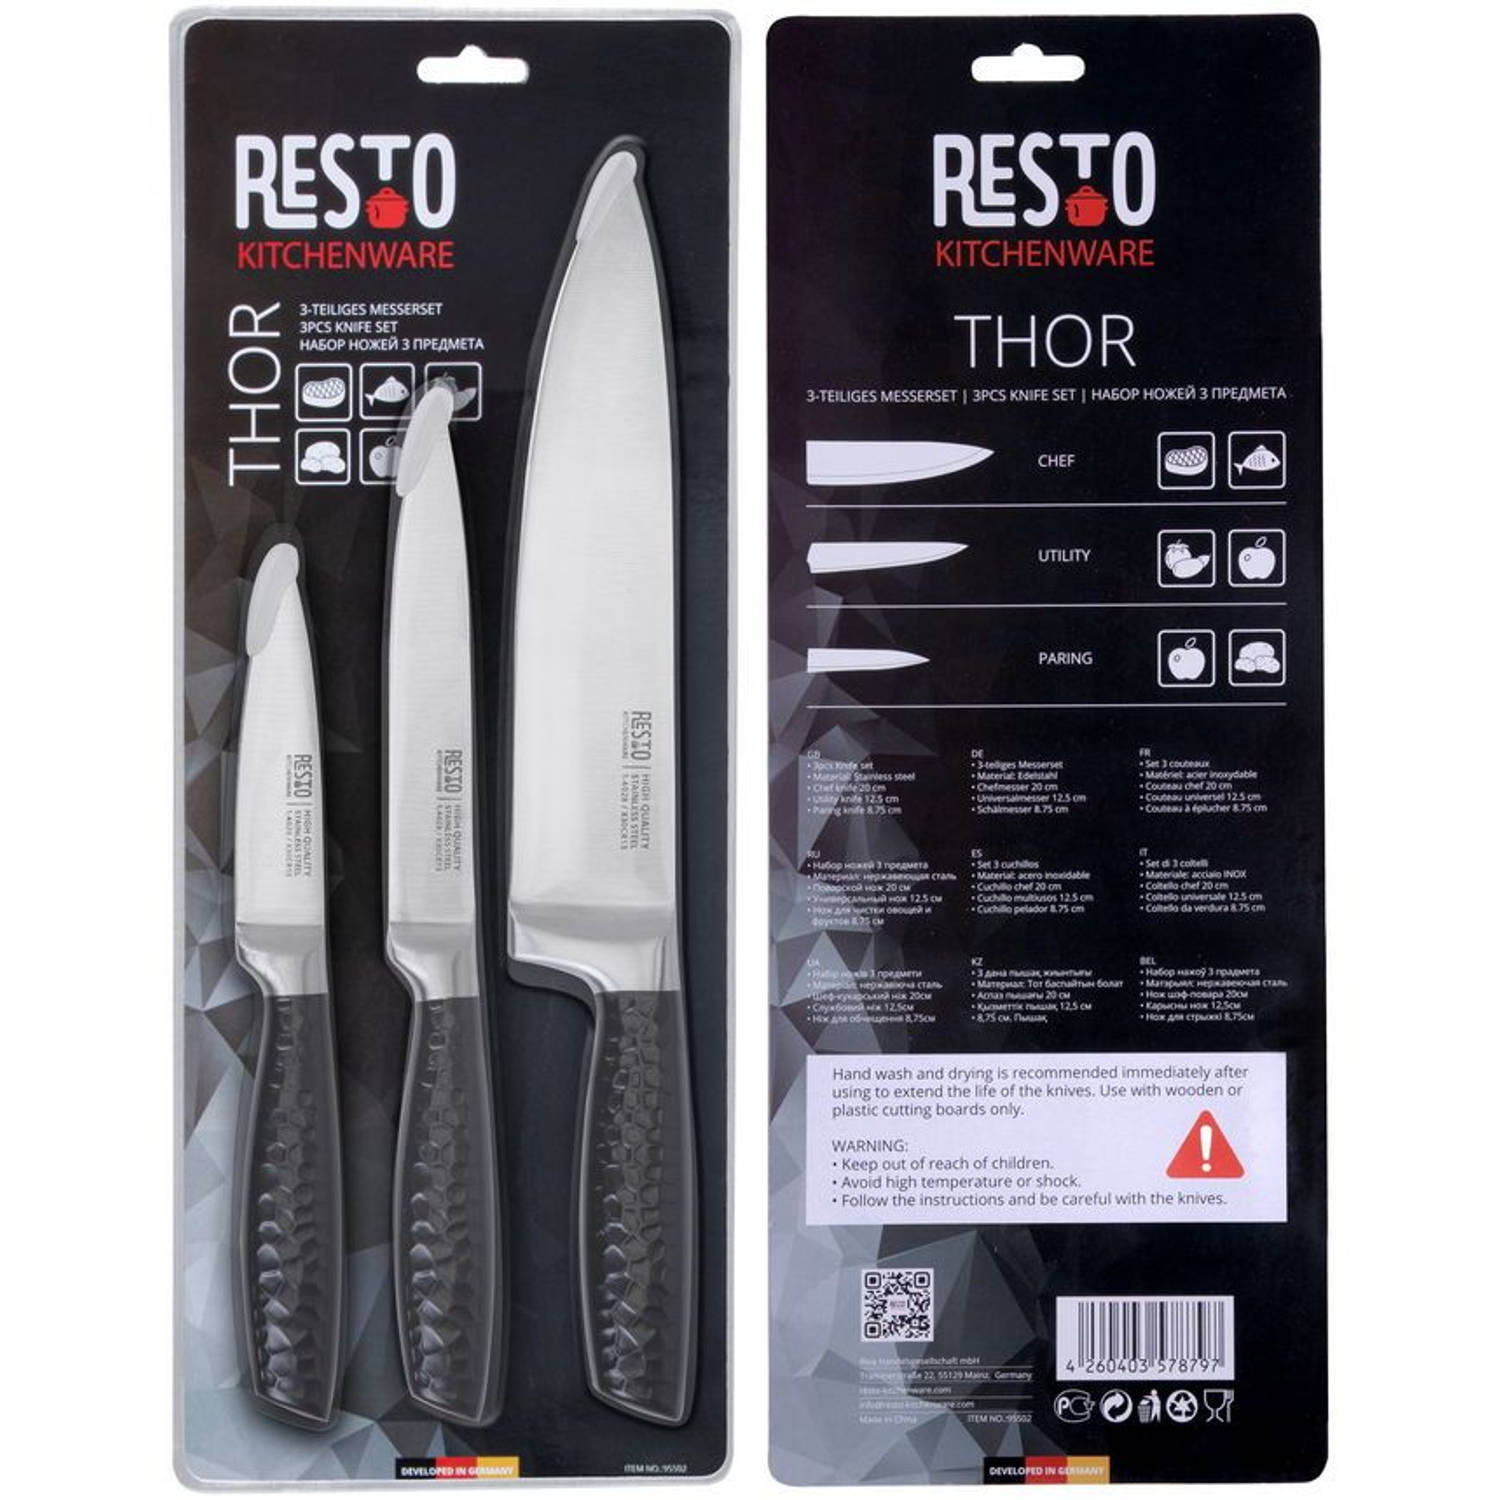 Resto Kitchenware Thor Messenset RVS